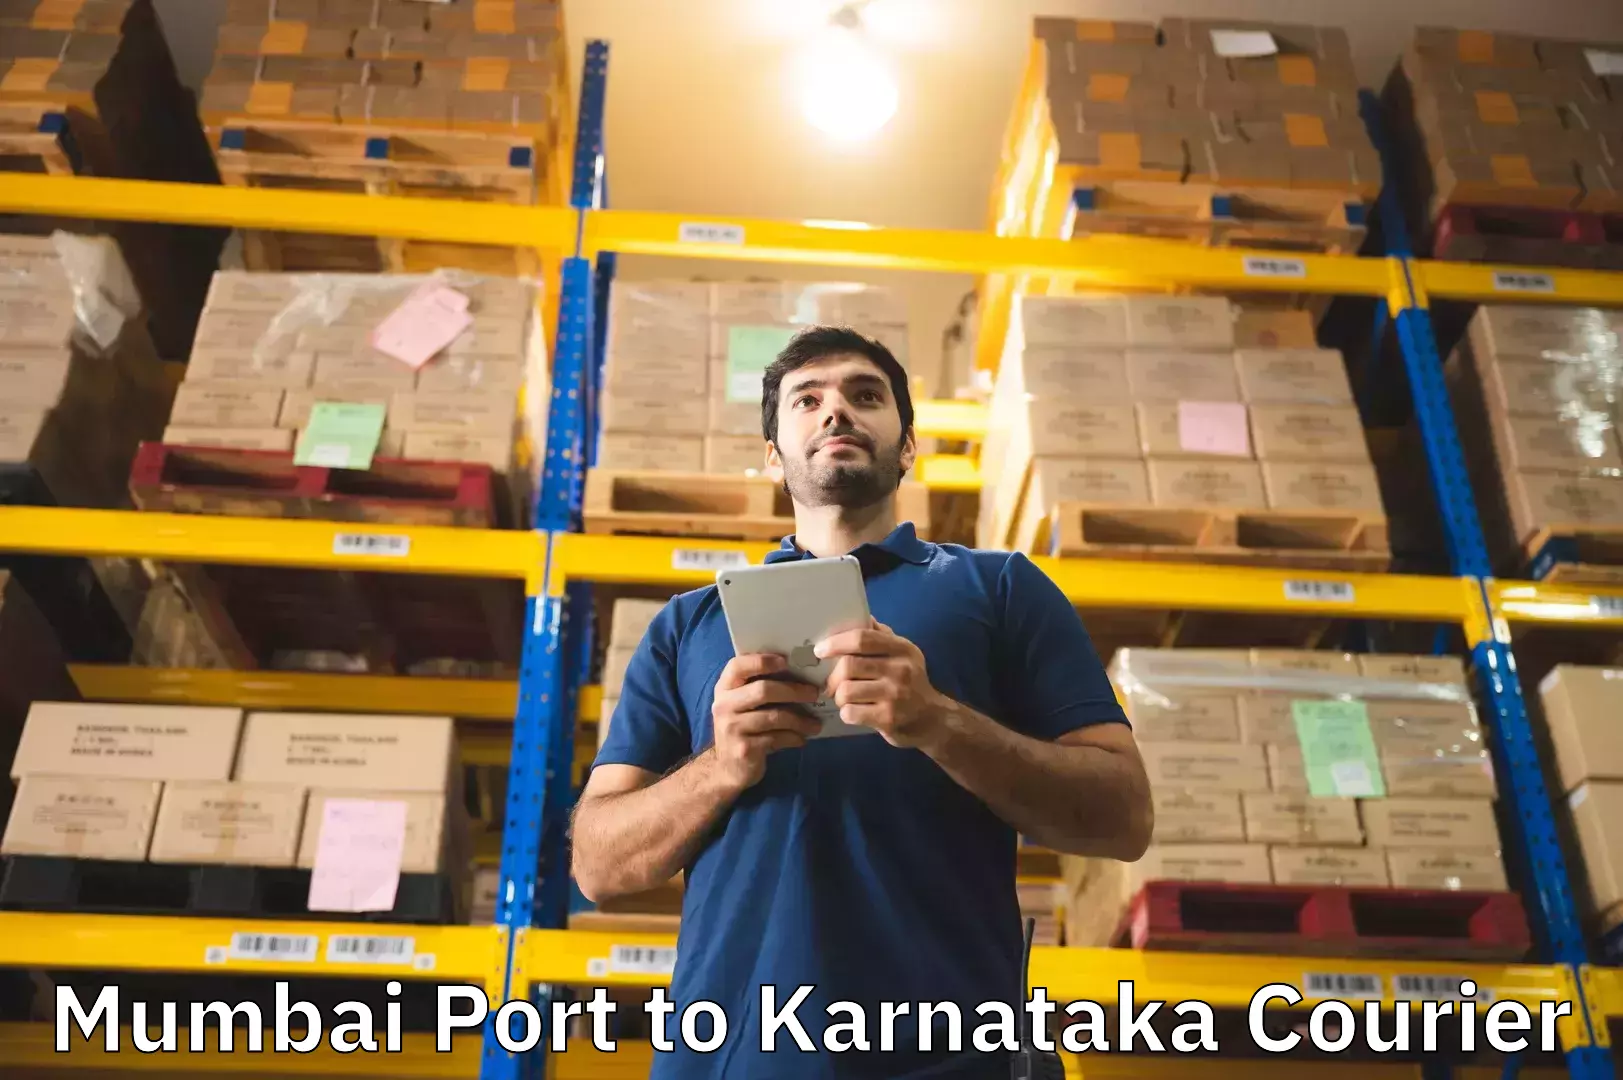 Luggage transport consulting Mumbai Port to Karnataka